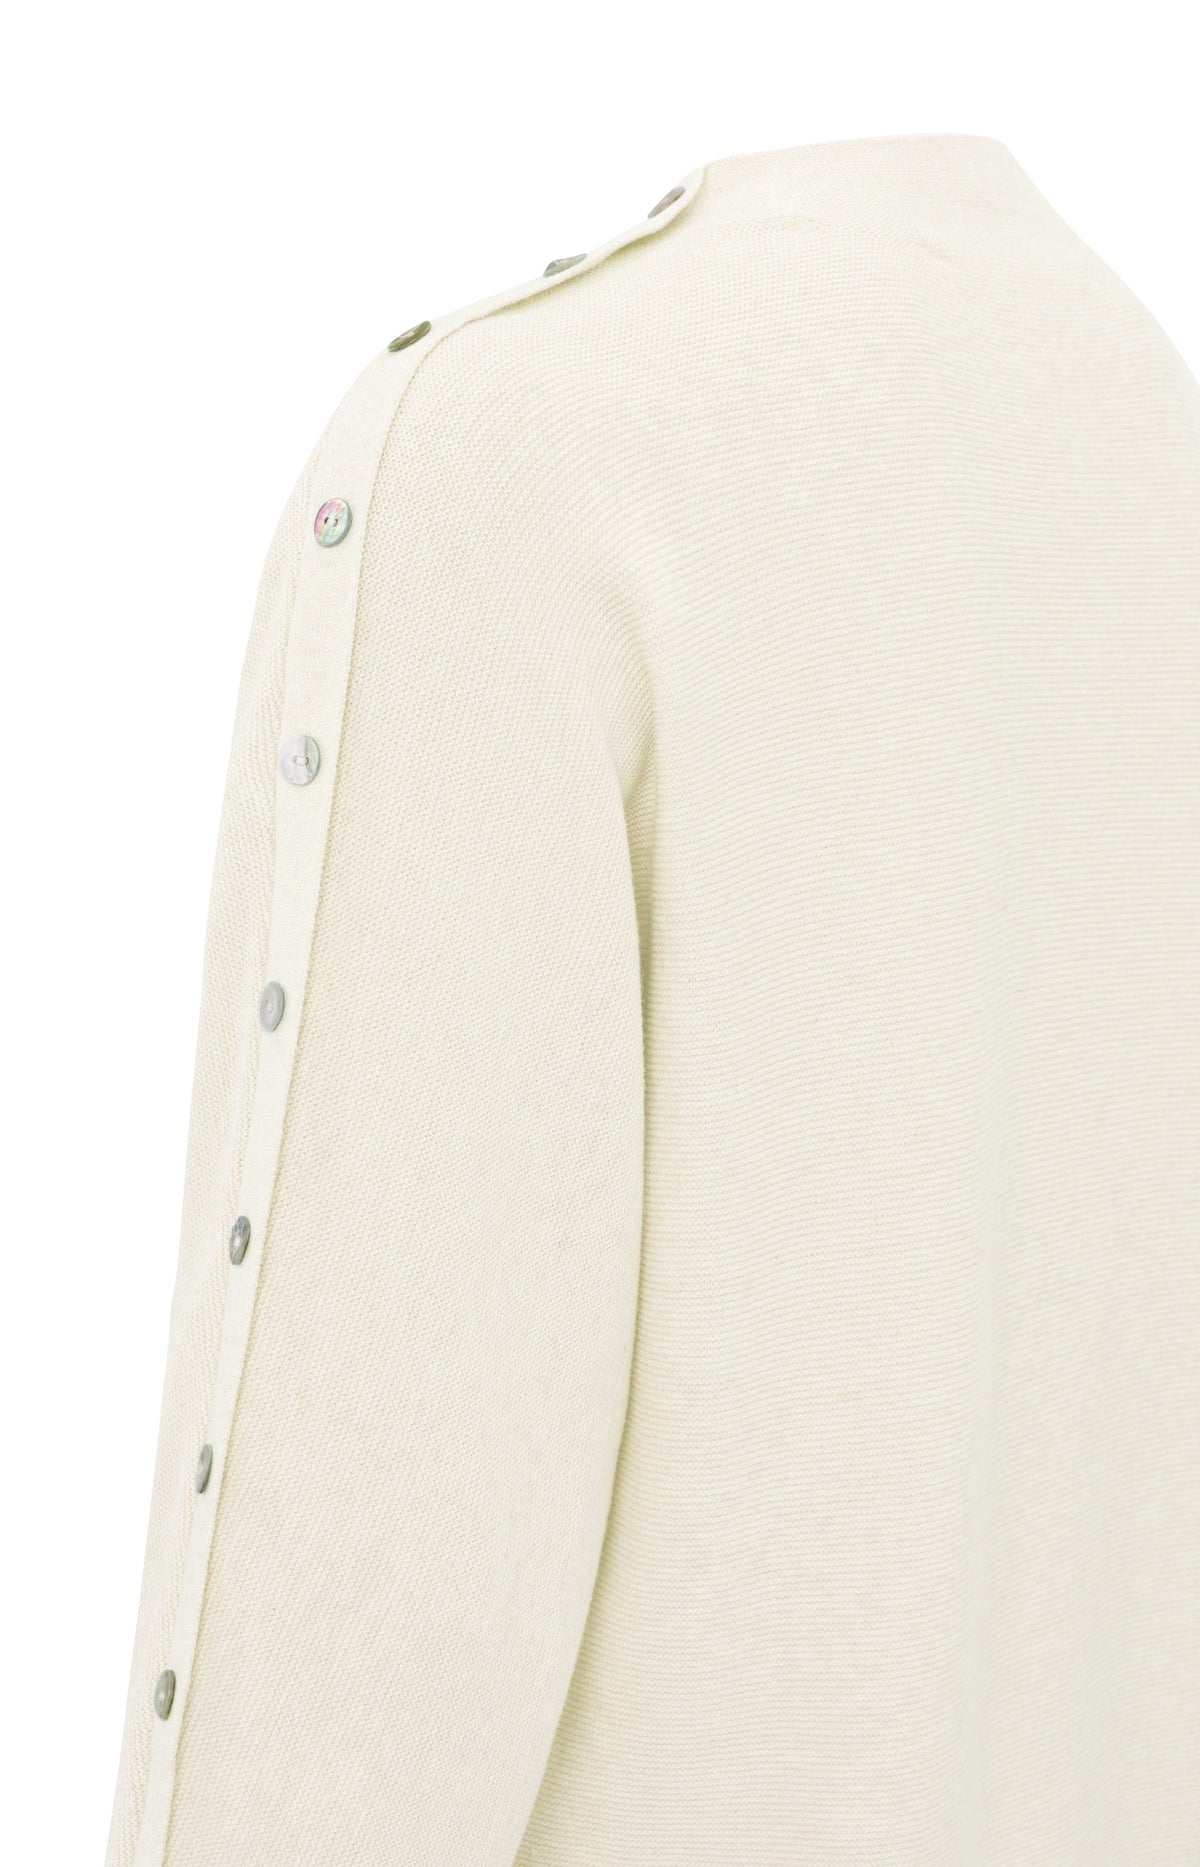 YaYa | Boatneck Sweater | Long Sleeves | Button Details | Ivory White